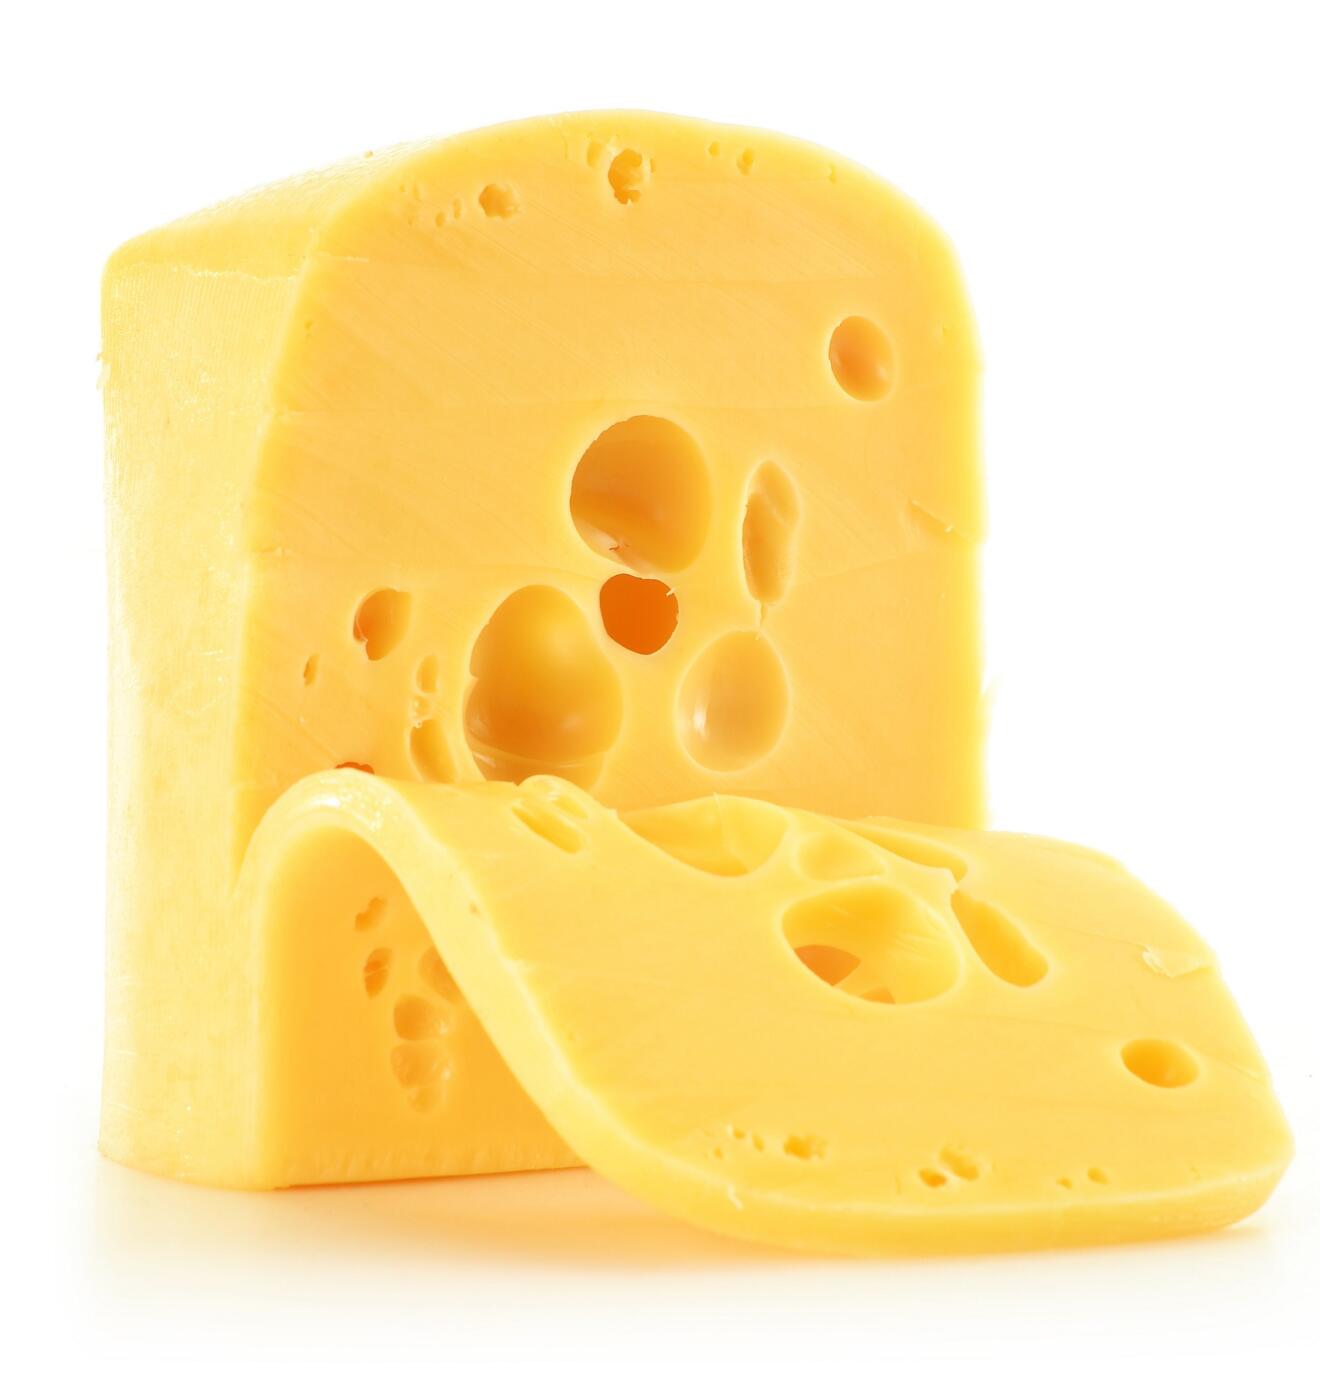 cheese-5179968_1920